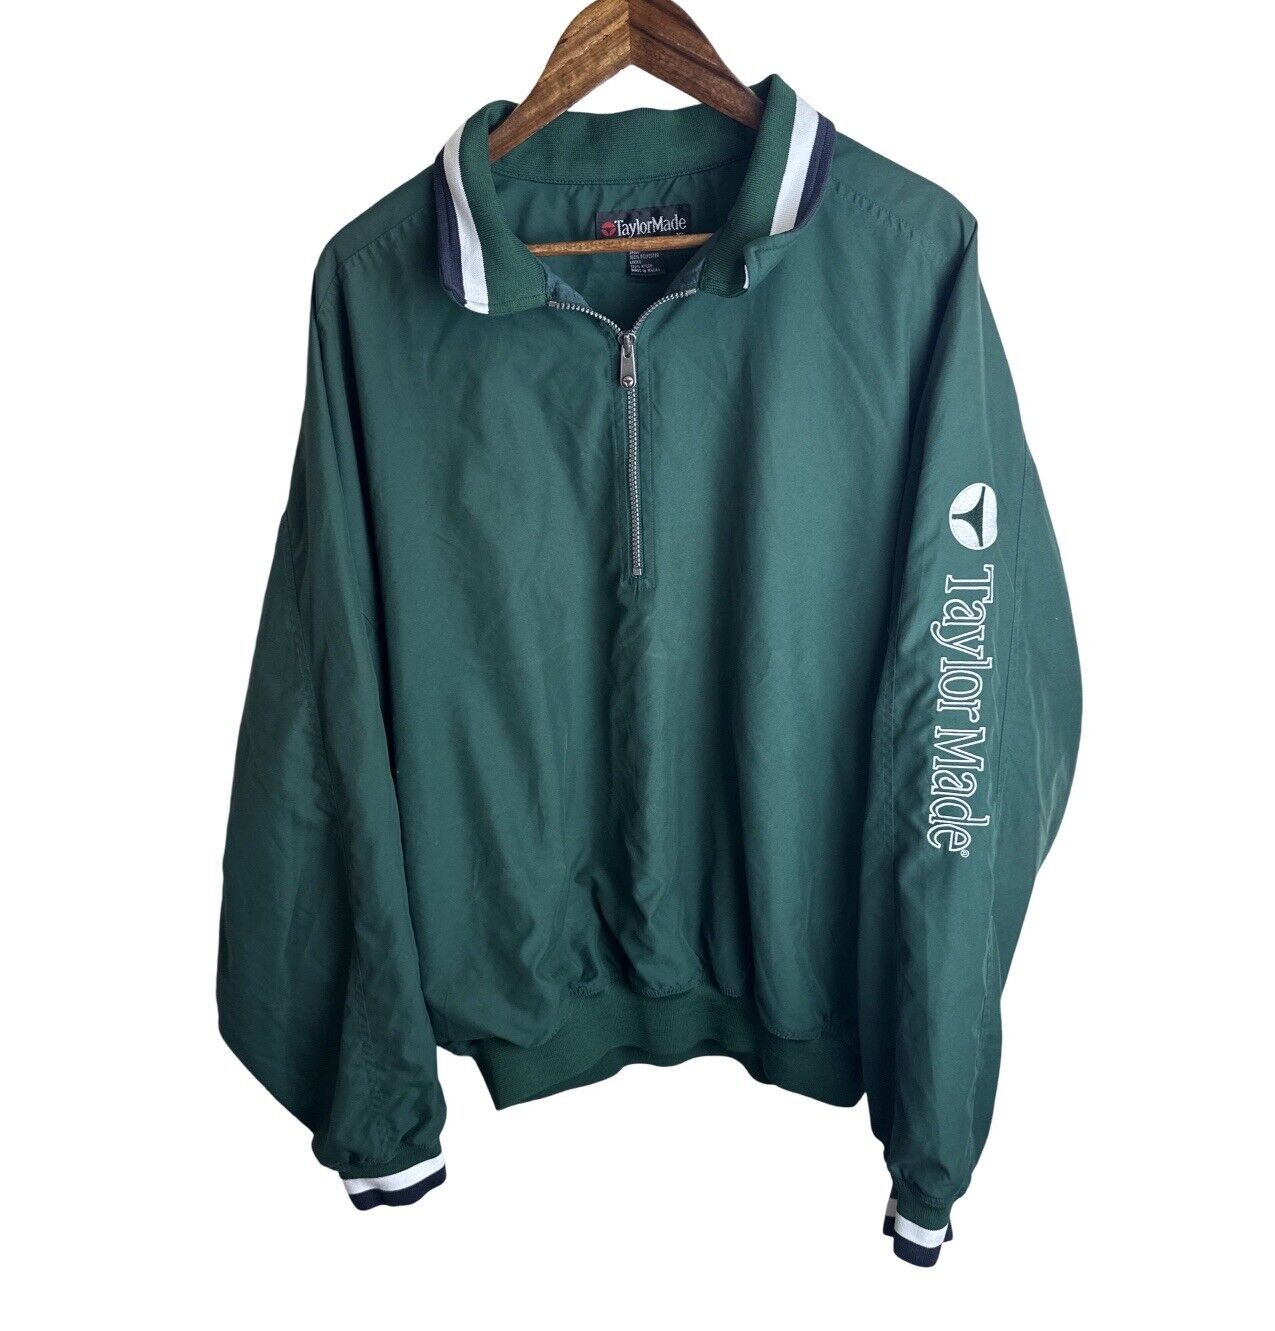 Vintage Taylor Made Golf Men’s 1/4 Zip Green Jacket Size XL